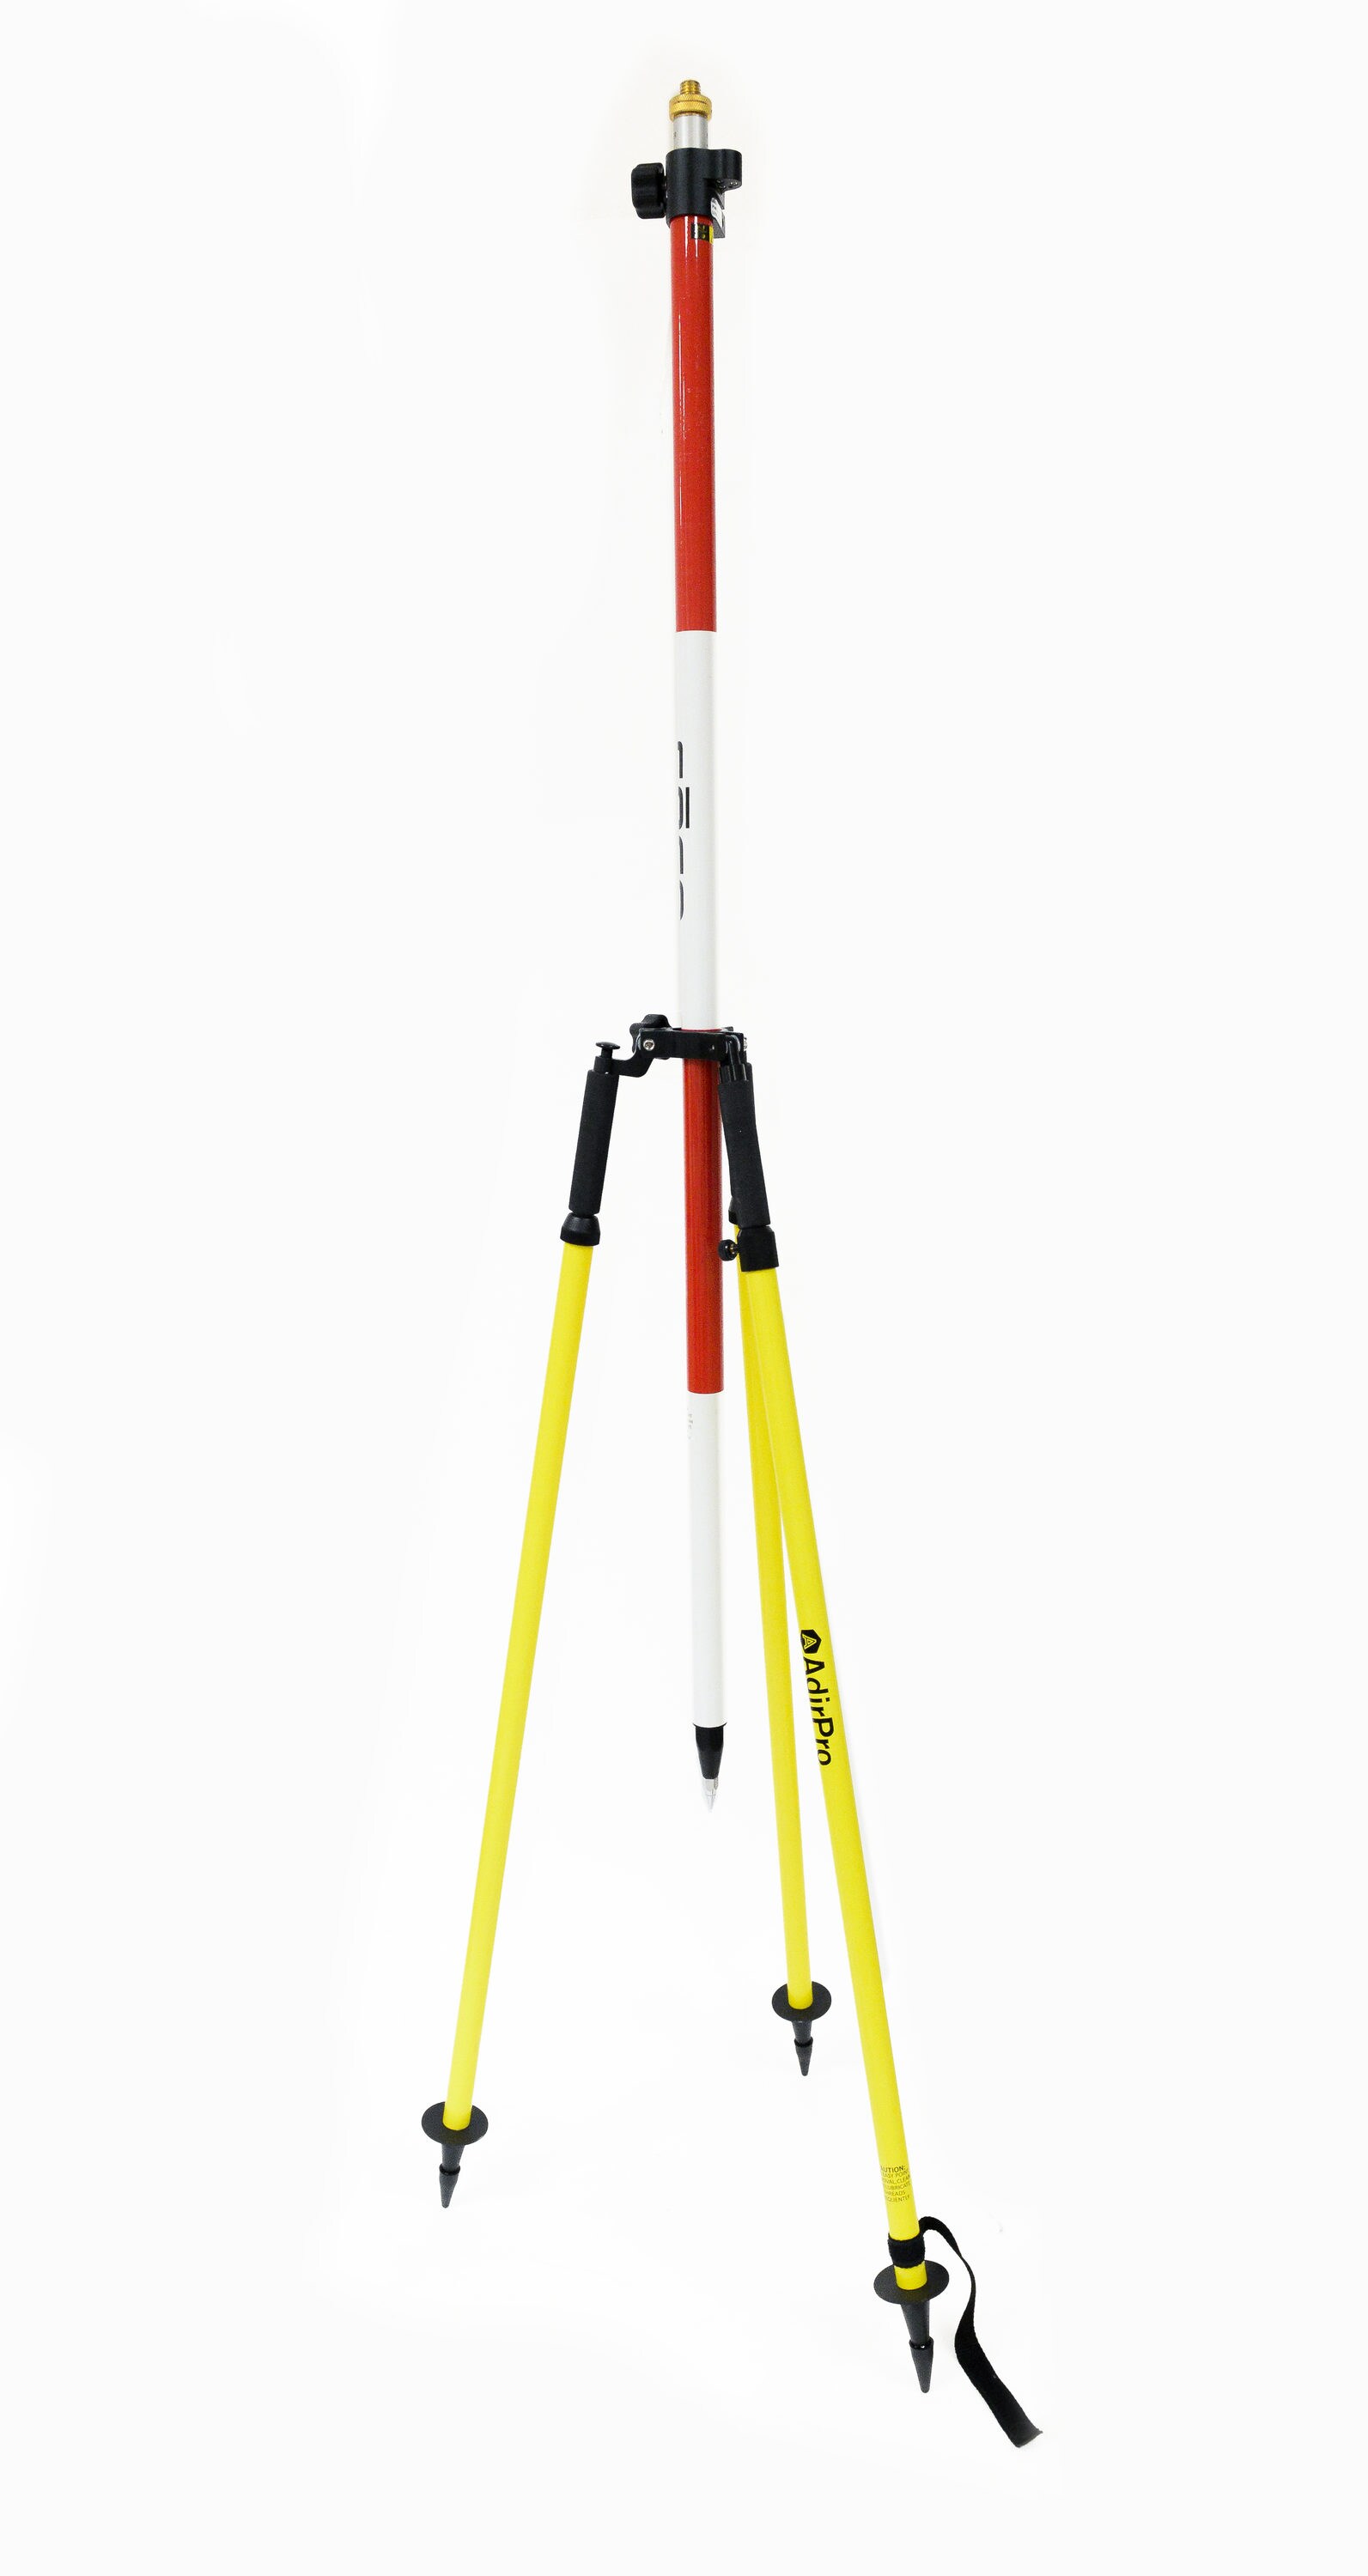 AdirPro Thumb Release Yellow Prism Pole Tripod Surveying Total Station Topcon 